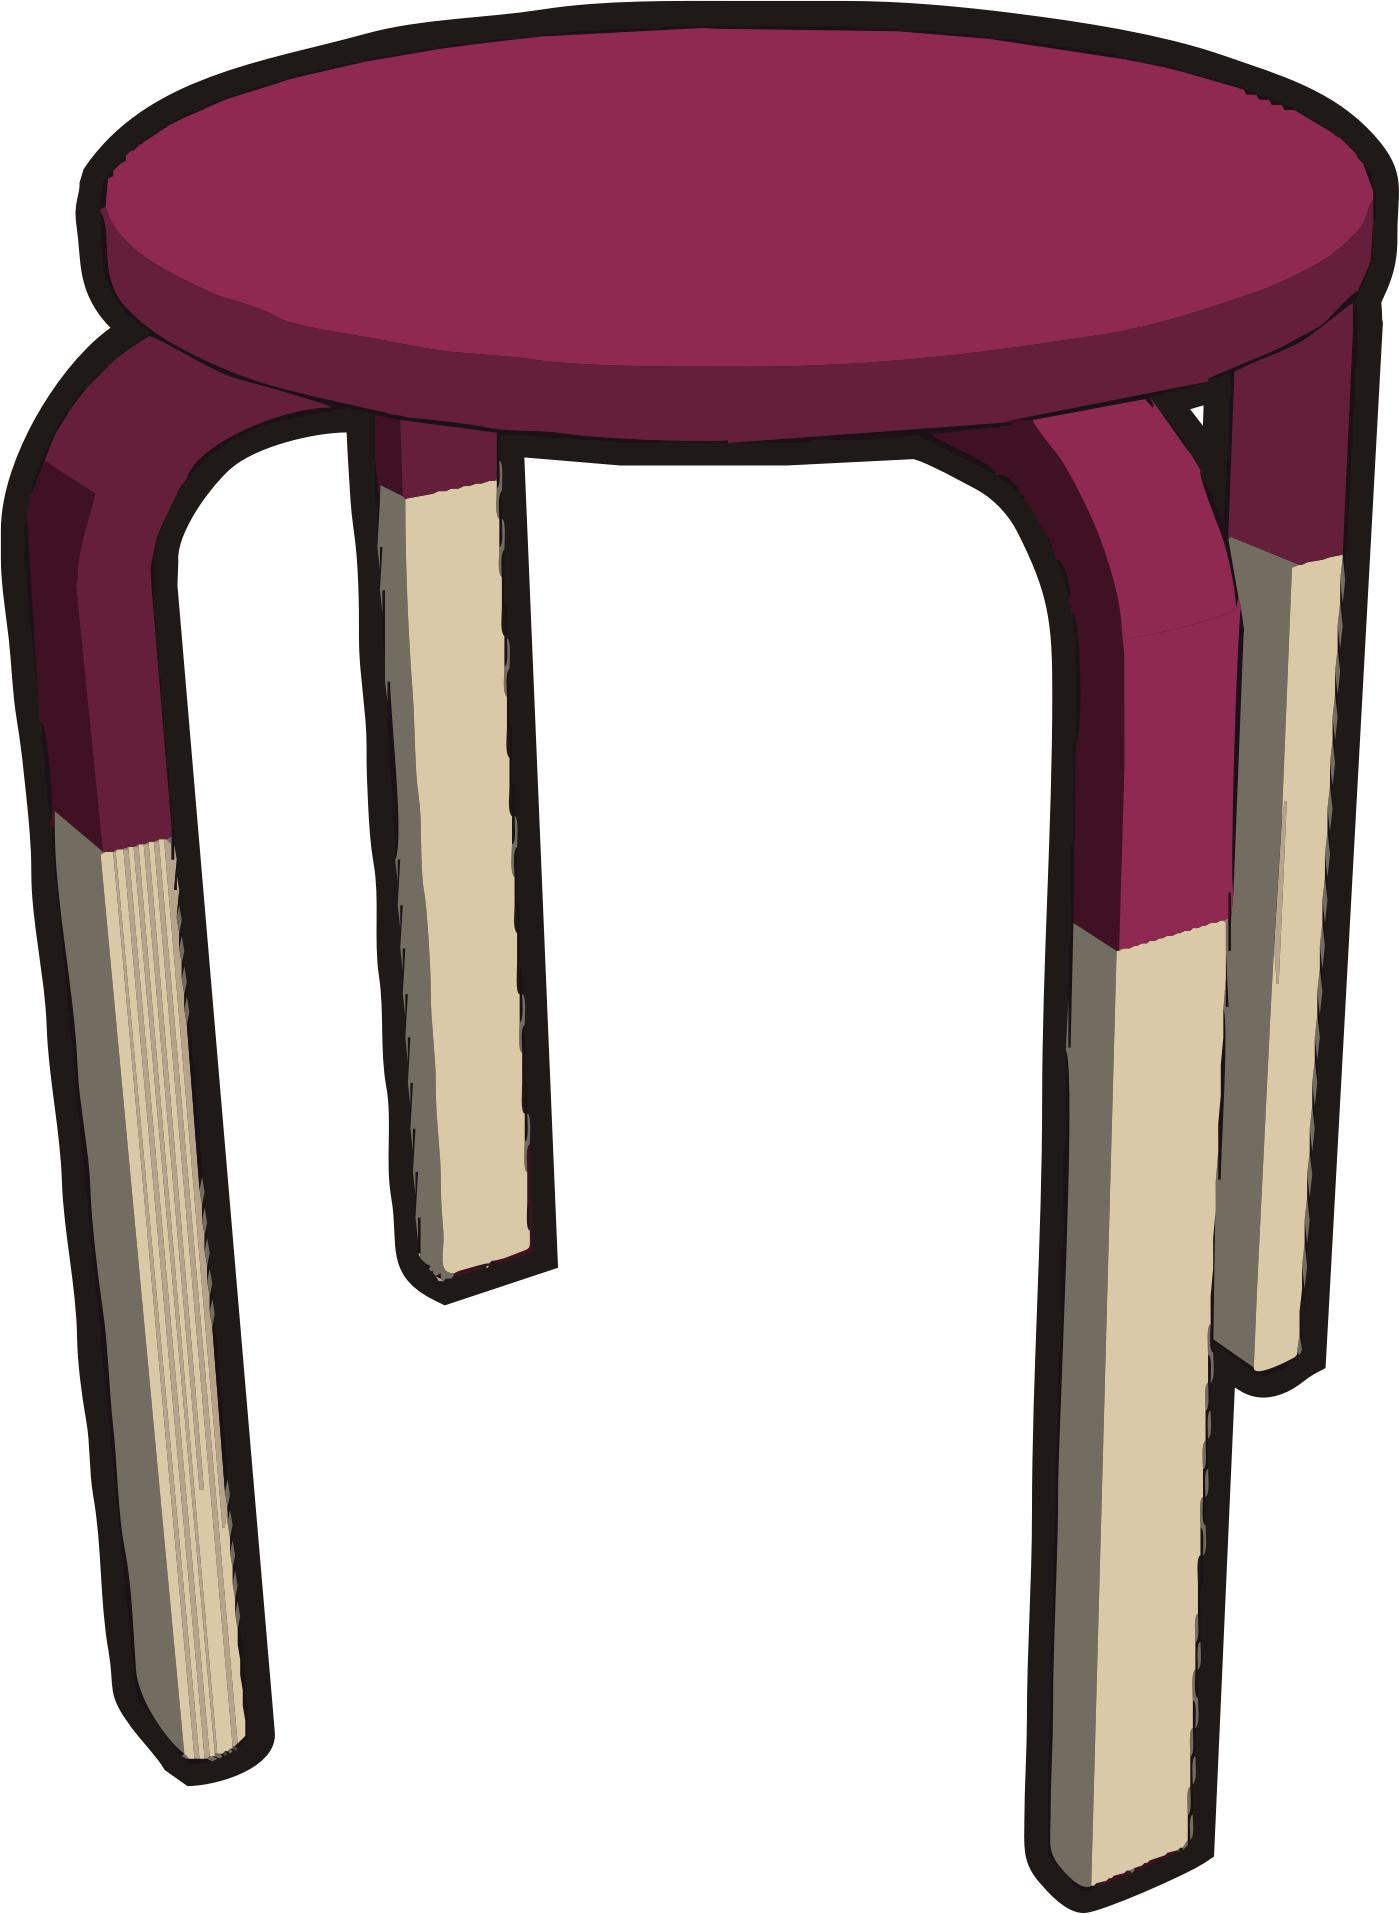 Ikea stuff - Frosta stool, half burgundi png